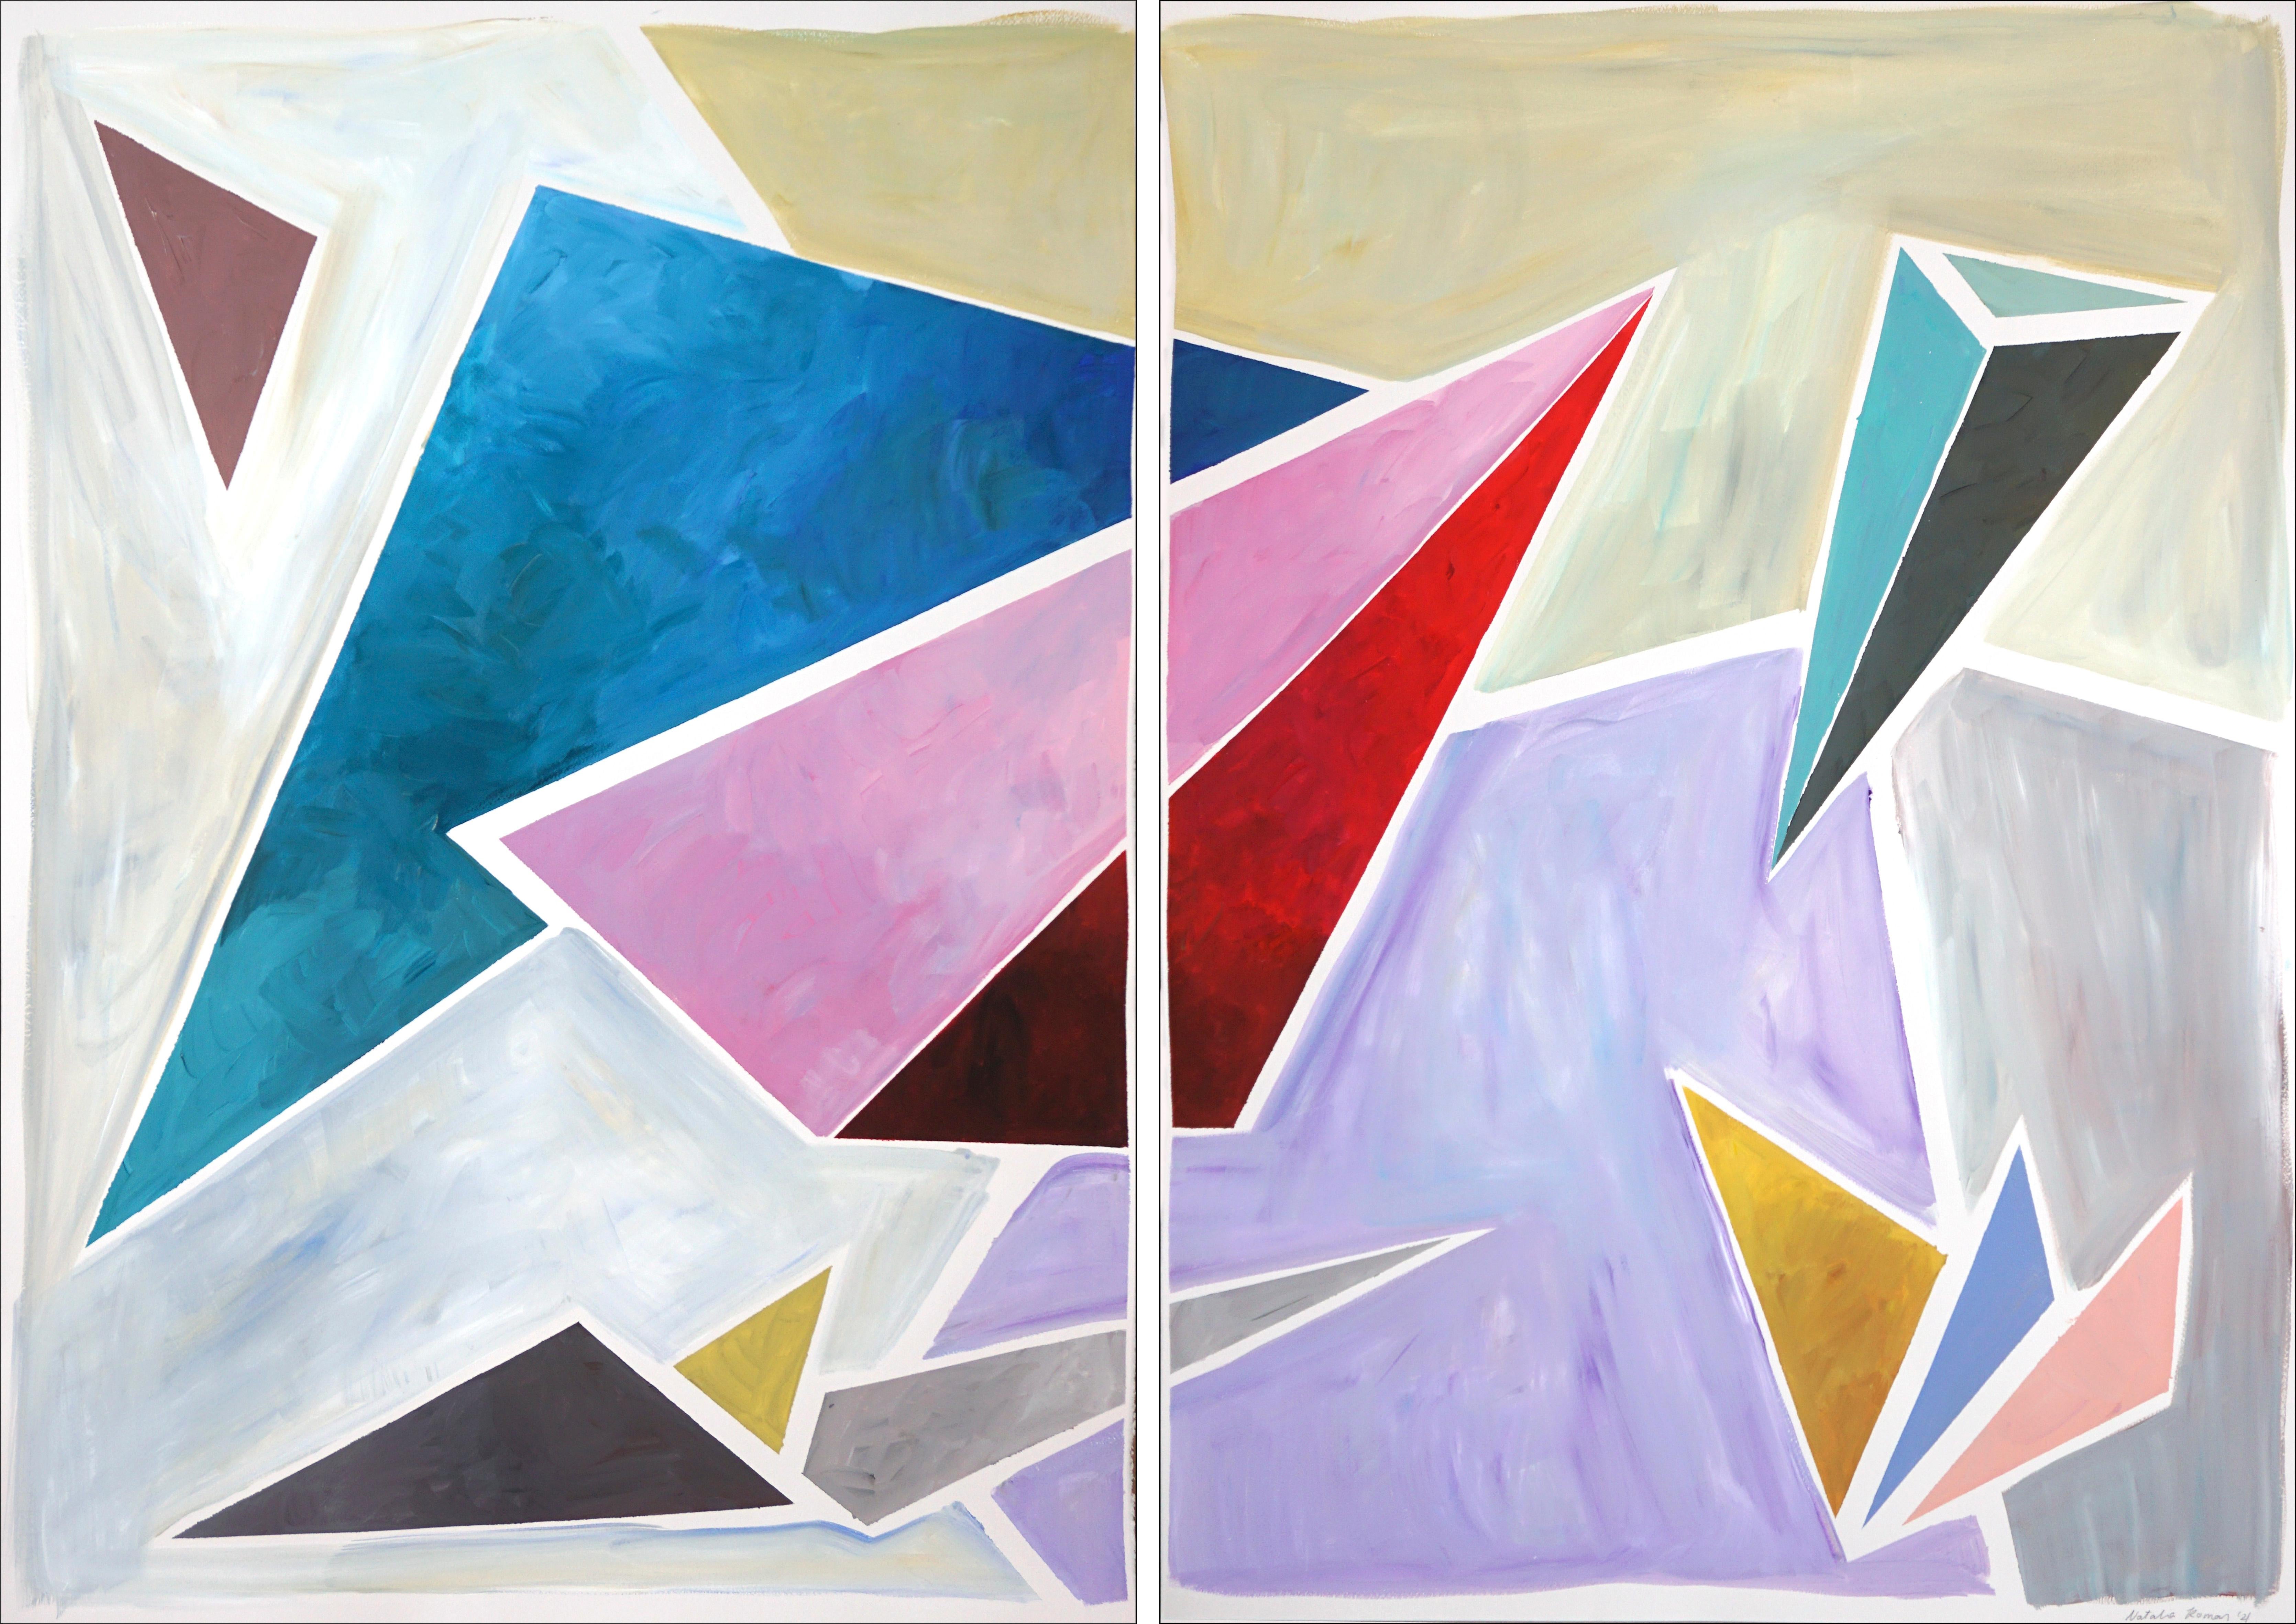 Retro Futuristic Angle Ensemble, Constructivist Painting Diptych in Pastel Tones